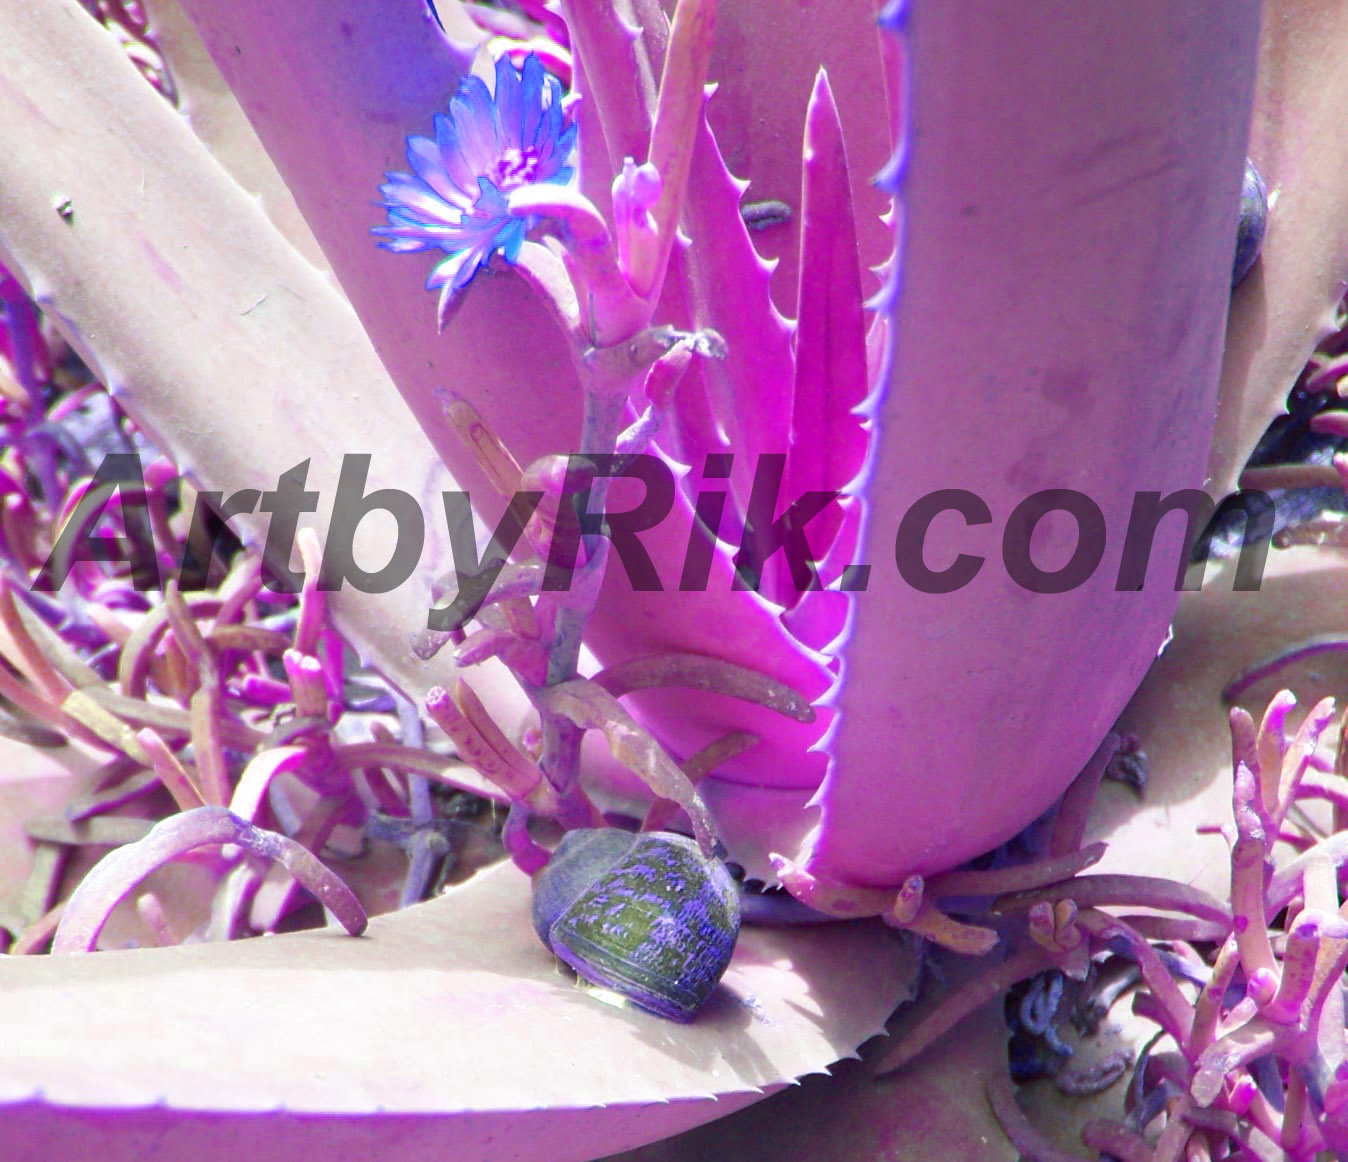 Purple cactus art with snail